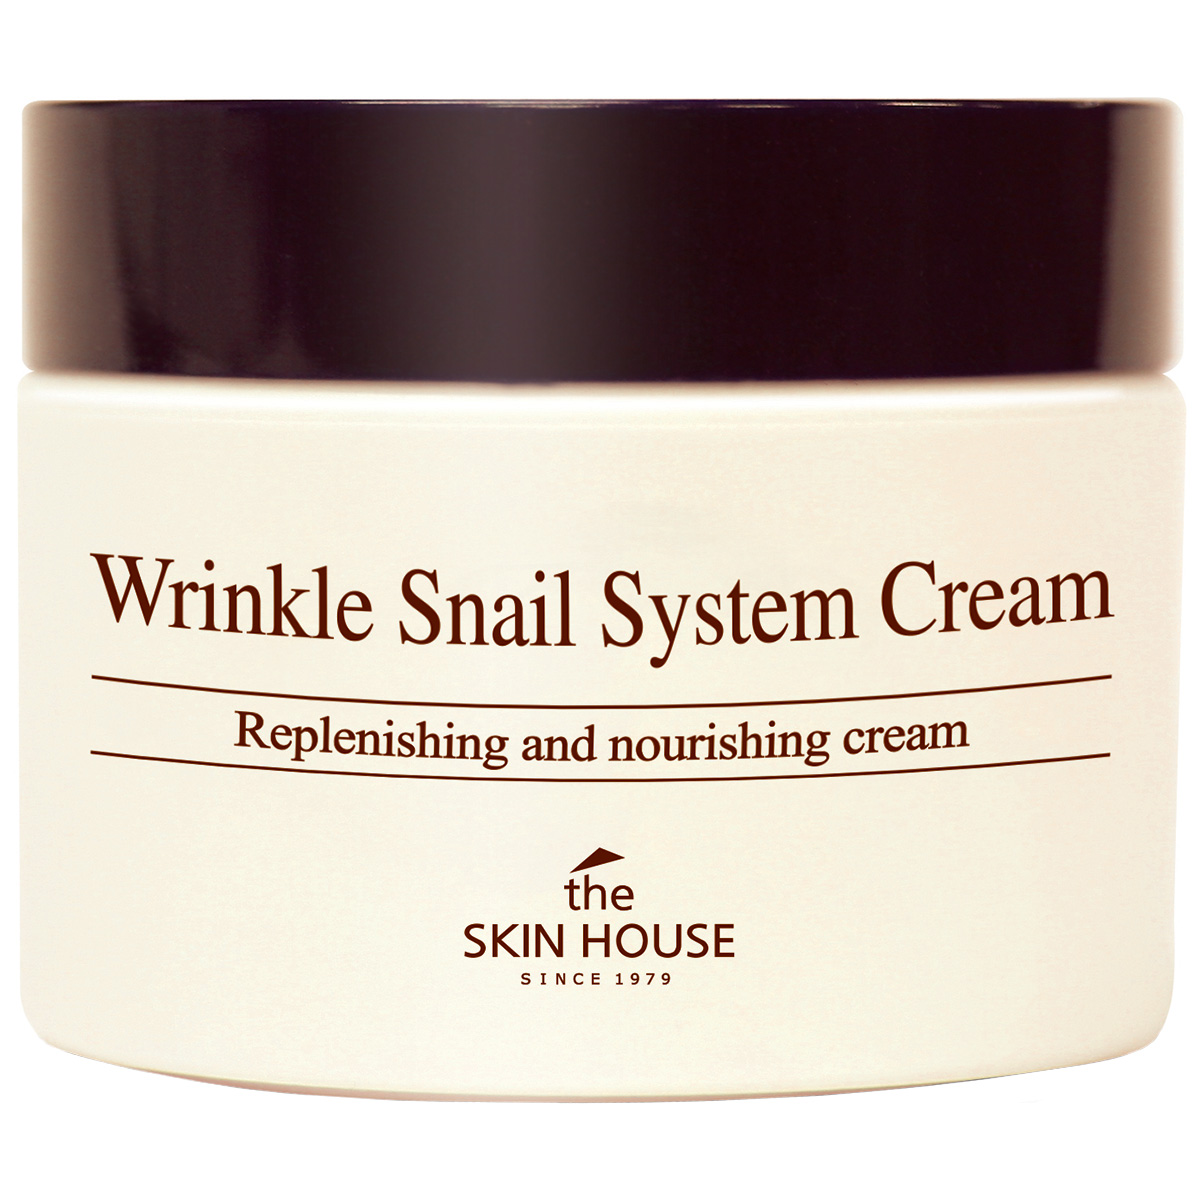 Wrinkle Snail System Cream, 50 ml The Skin House K-Beauty